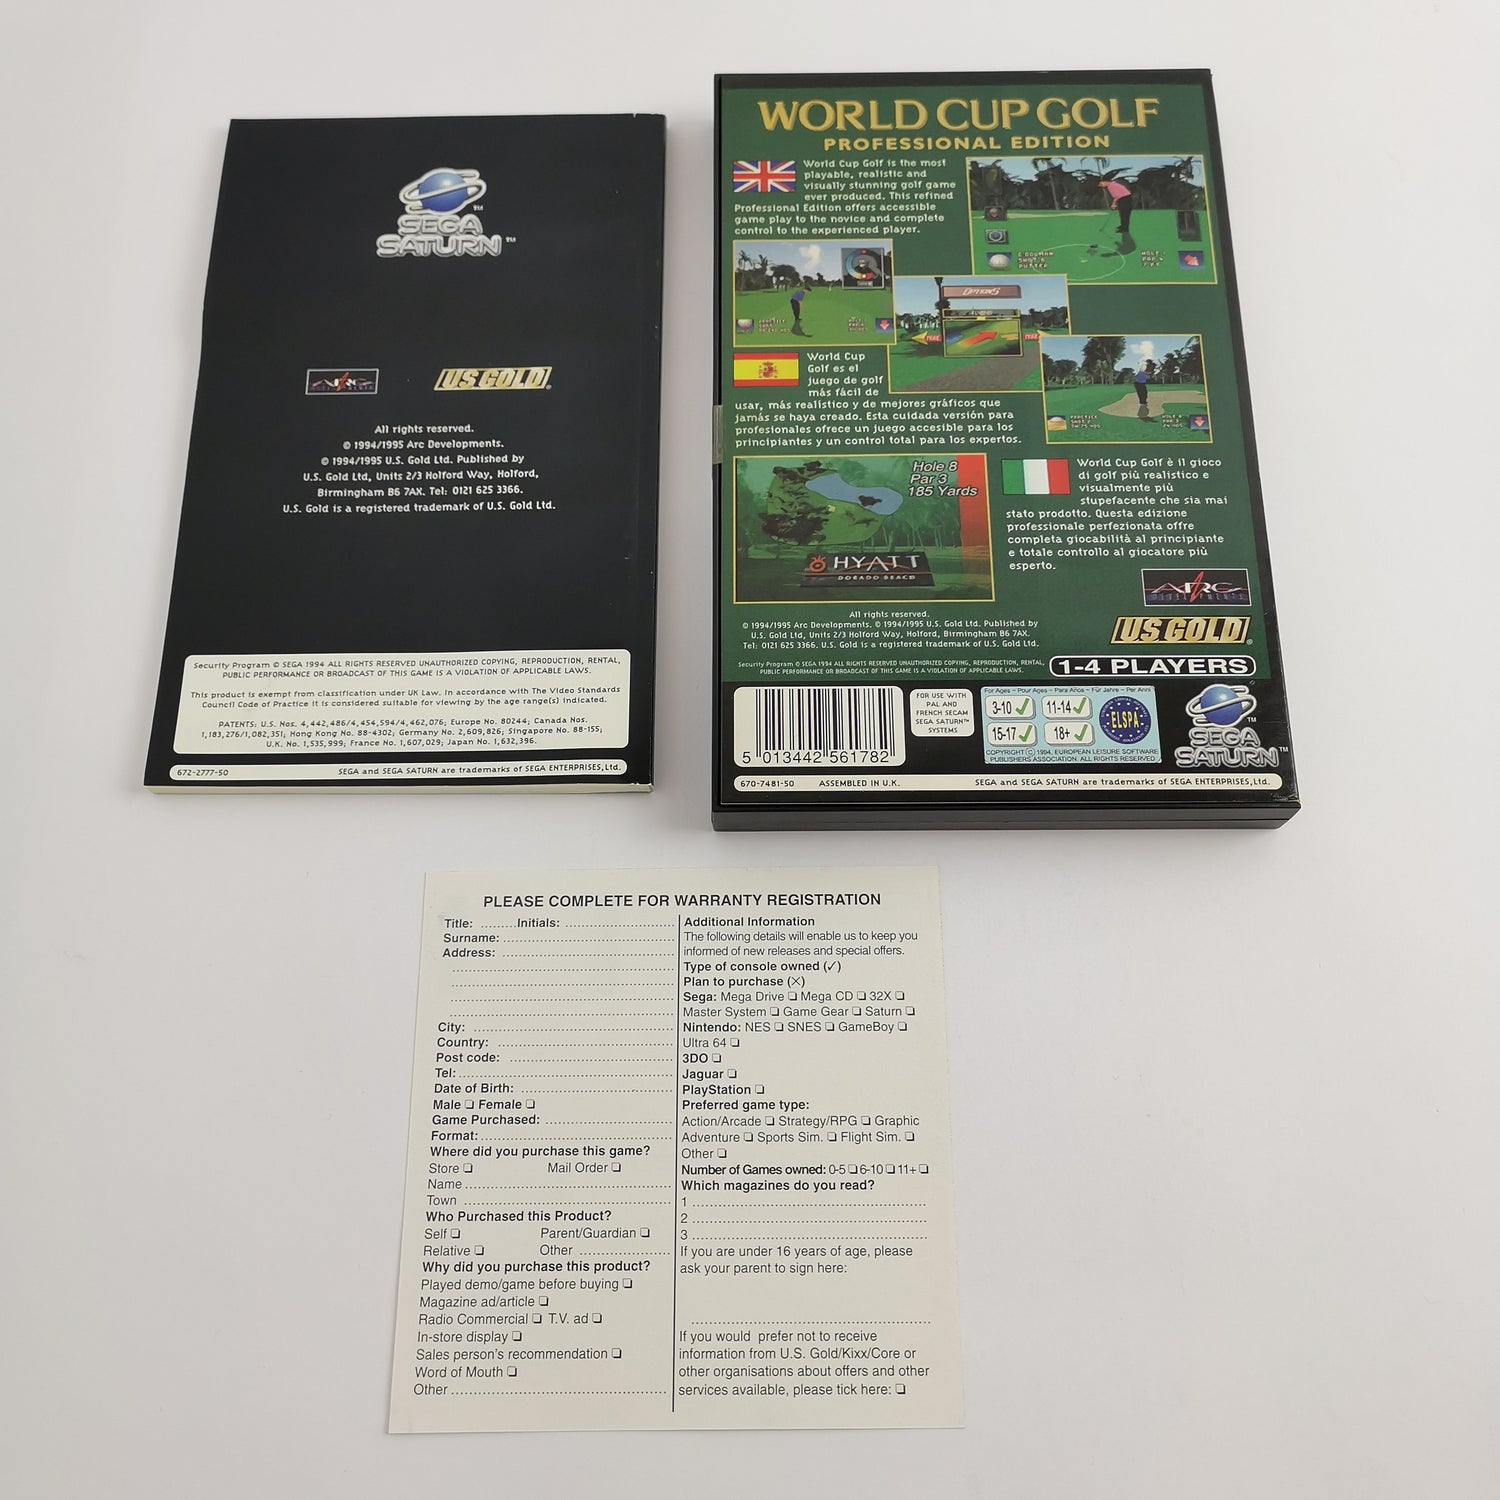 Sega Saturn Game: World Cup Golf Professional Edition | Original packaging PAL version